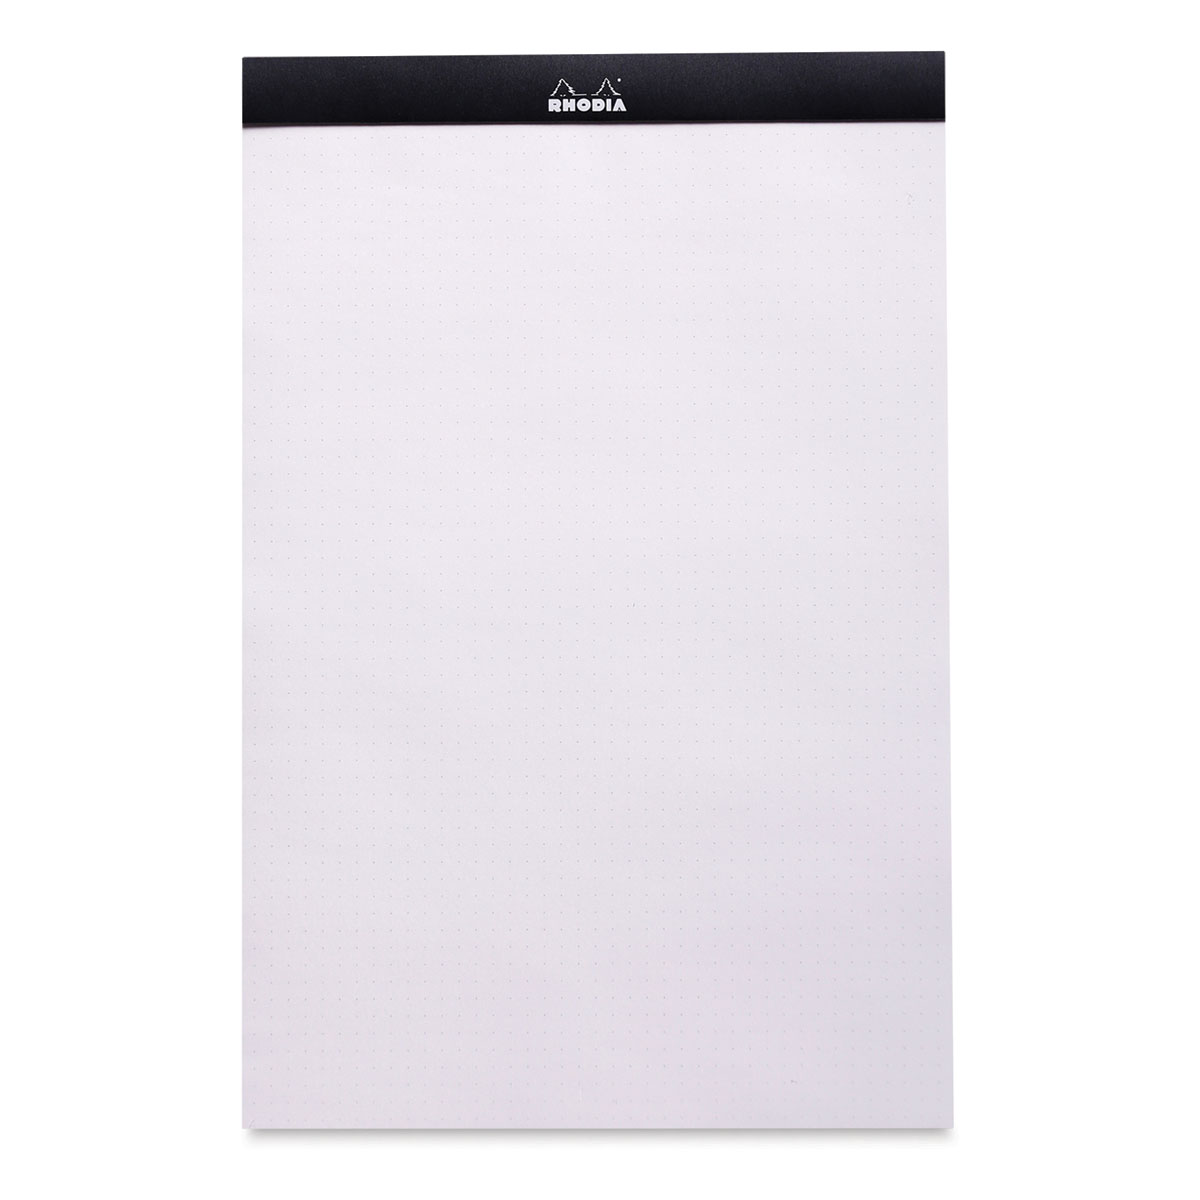 Rhodia Classic Notepad DotPad Top Staplebound 8 1/4 x 12 1/2 Grid Black 80 sheet 